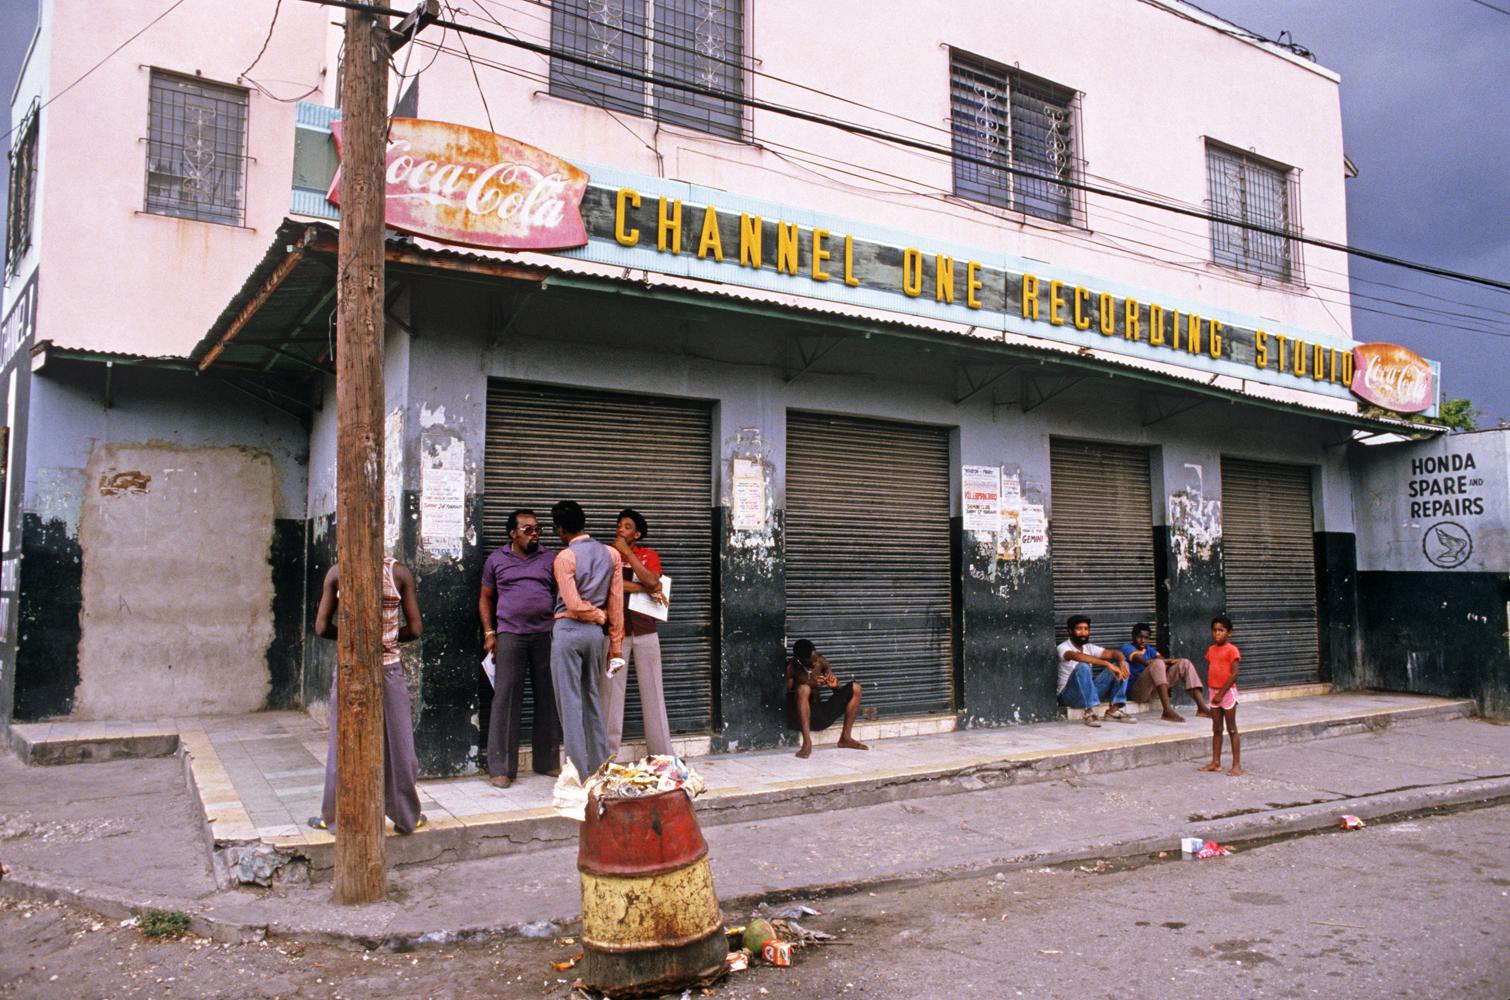 Alain Le Garsmeur Figurative Photograph – „Channel One Recording Studio Jamaica“  Limitierte Auflage C-Typ in Übergröße 